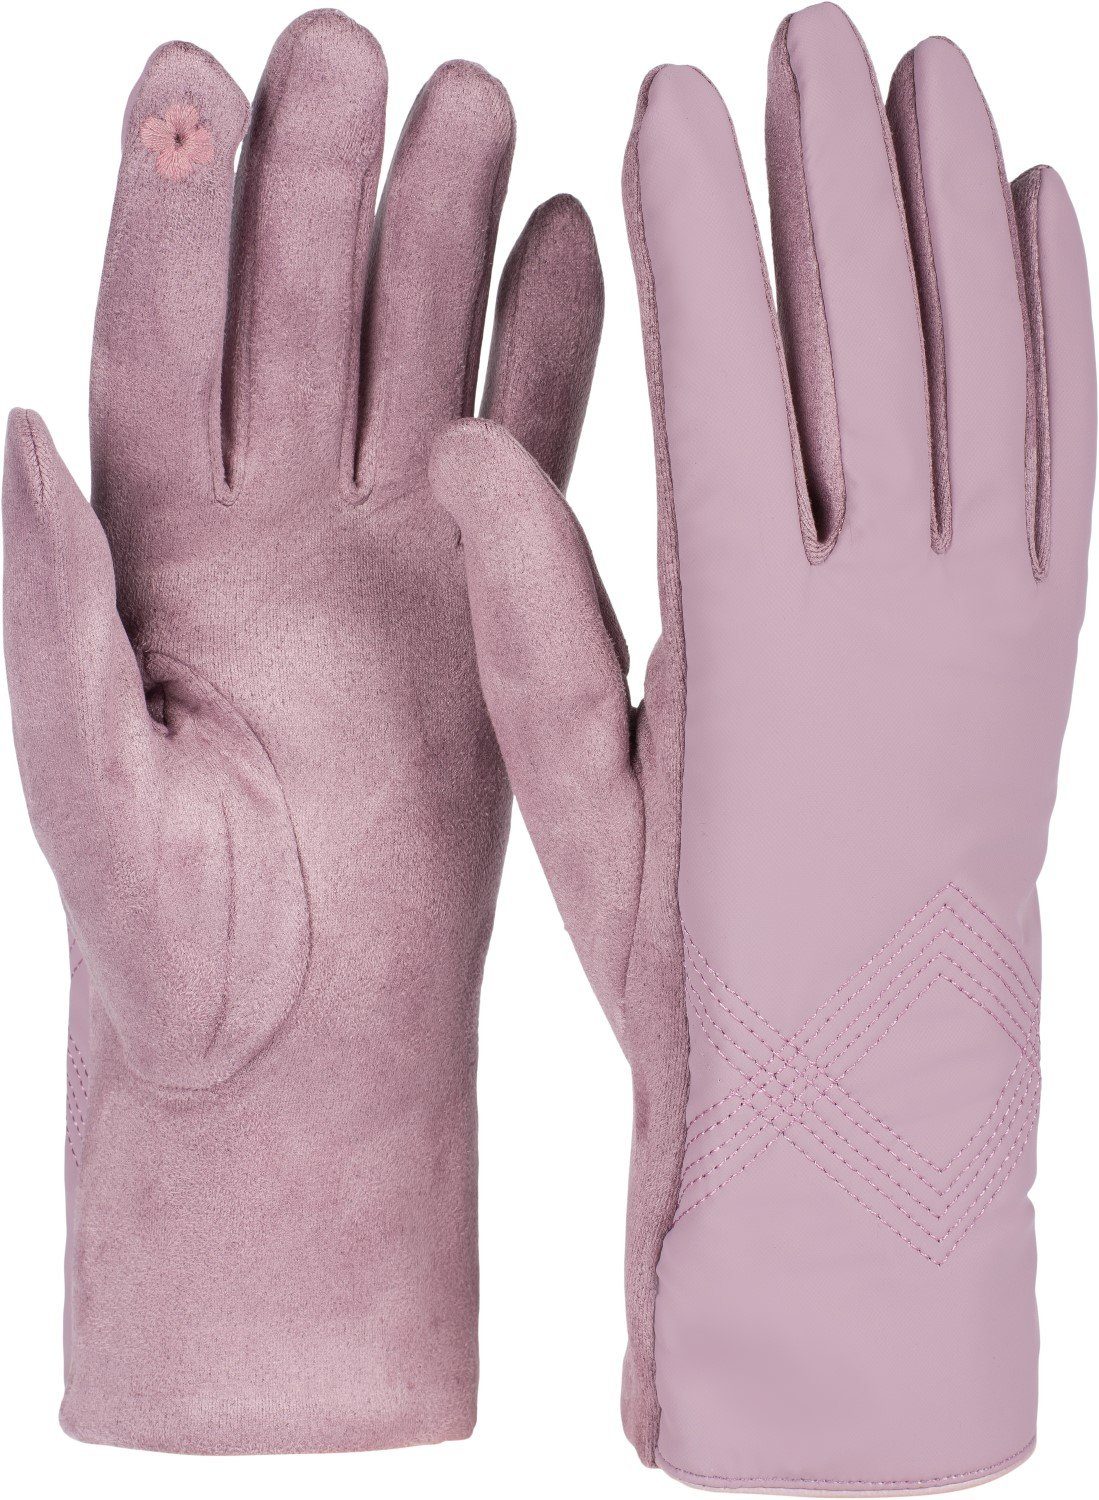 styleBREAKER Fleecehandschuhe Touchscreen Handschuhe Zick-Zack bestickt Mauve